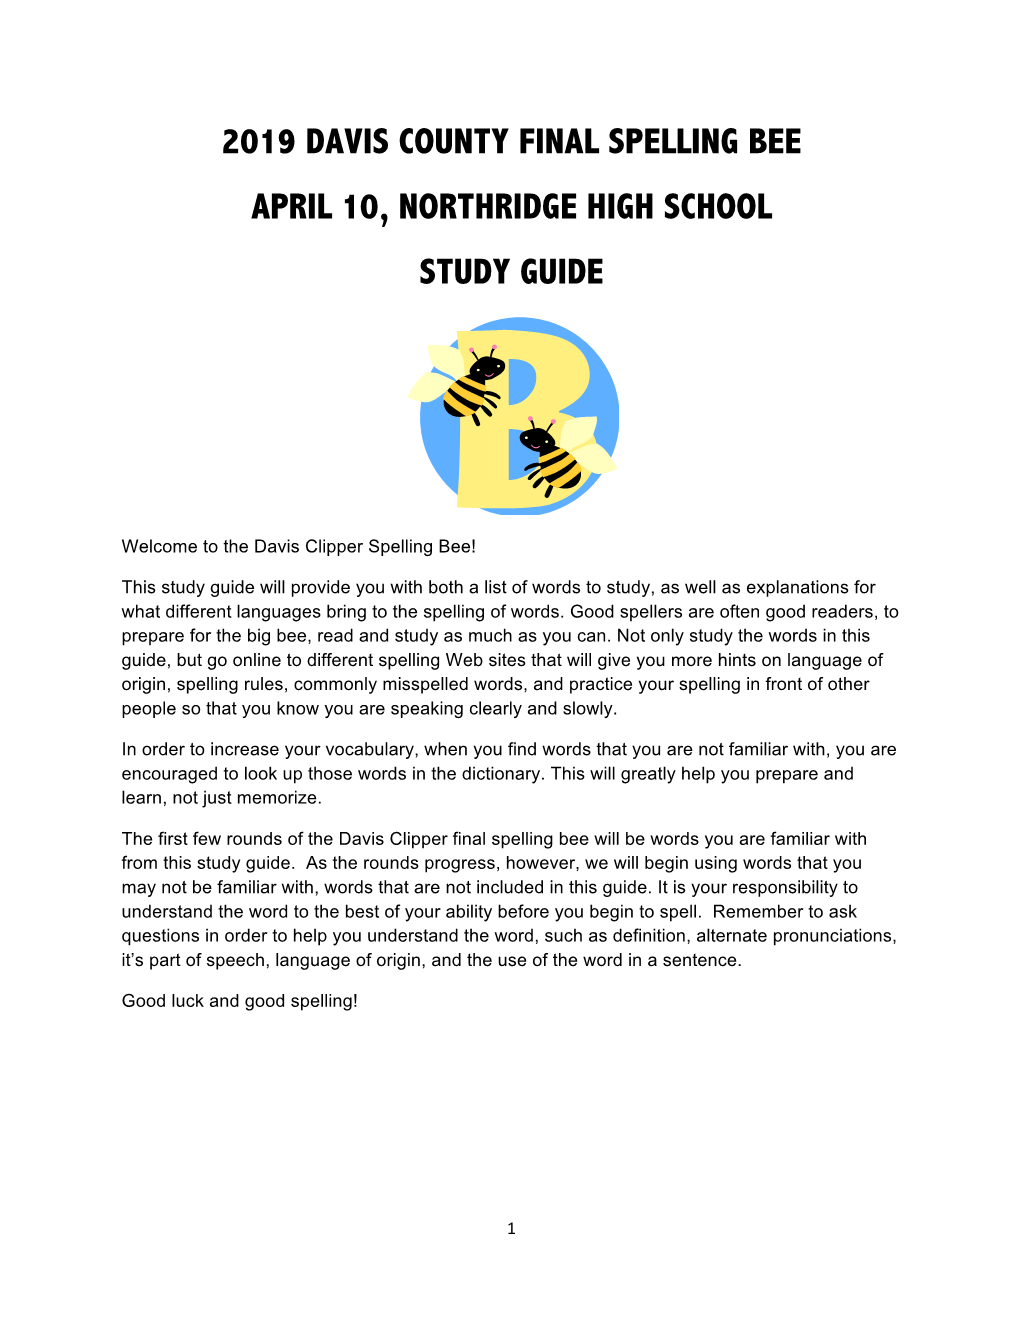 2019 Davis County Final Spelling Bee April 10, Northridge High School Study Guide